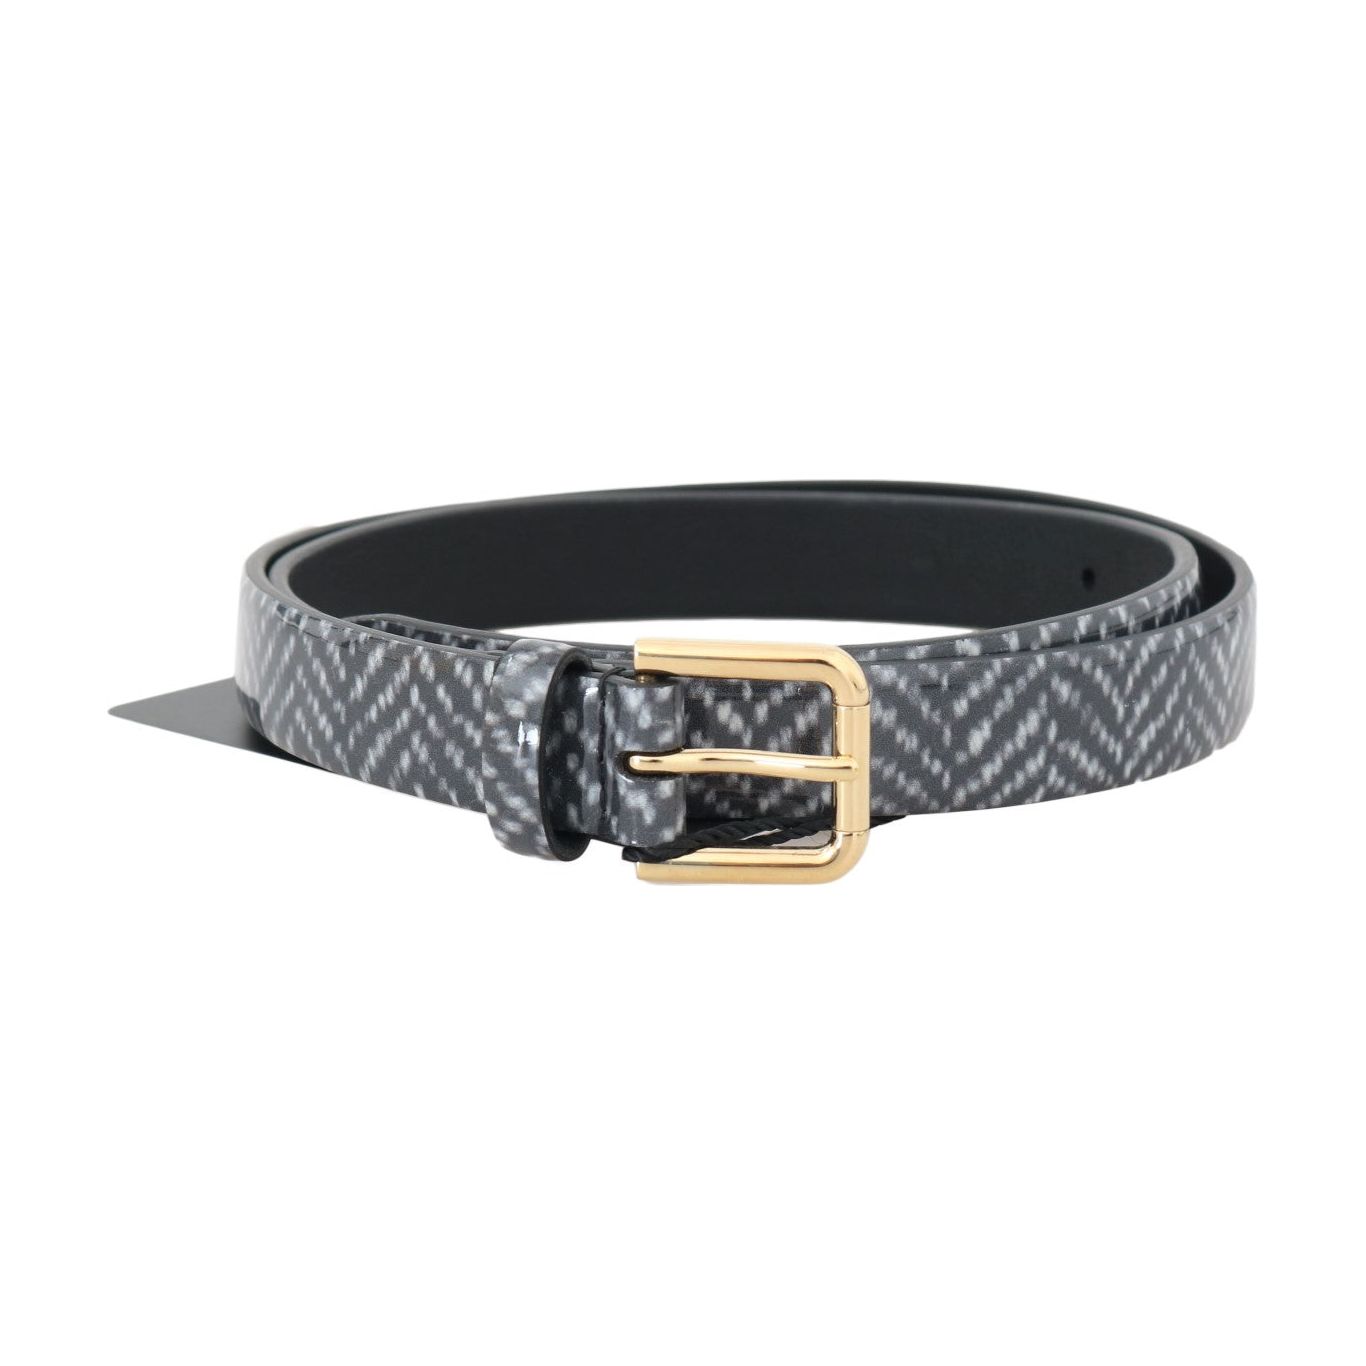 Dolce & Gabbana Elegant Chevron Leather Waist Belt black-white-chevron-pattern-leather-belt Belt 496158-black-white-chevron-pattern-leather-belt.jpg